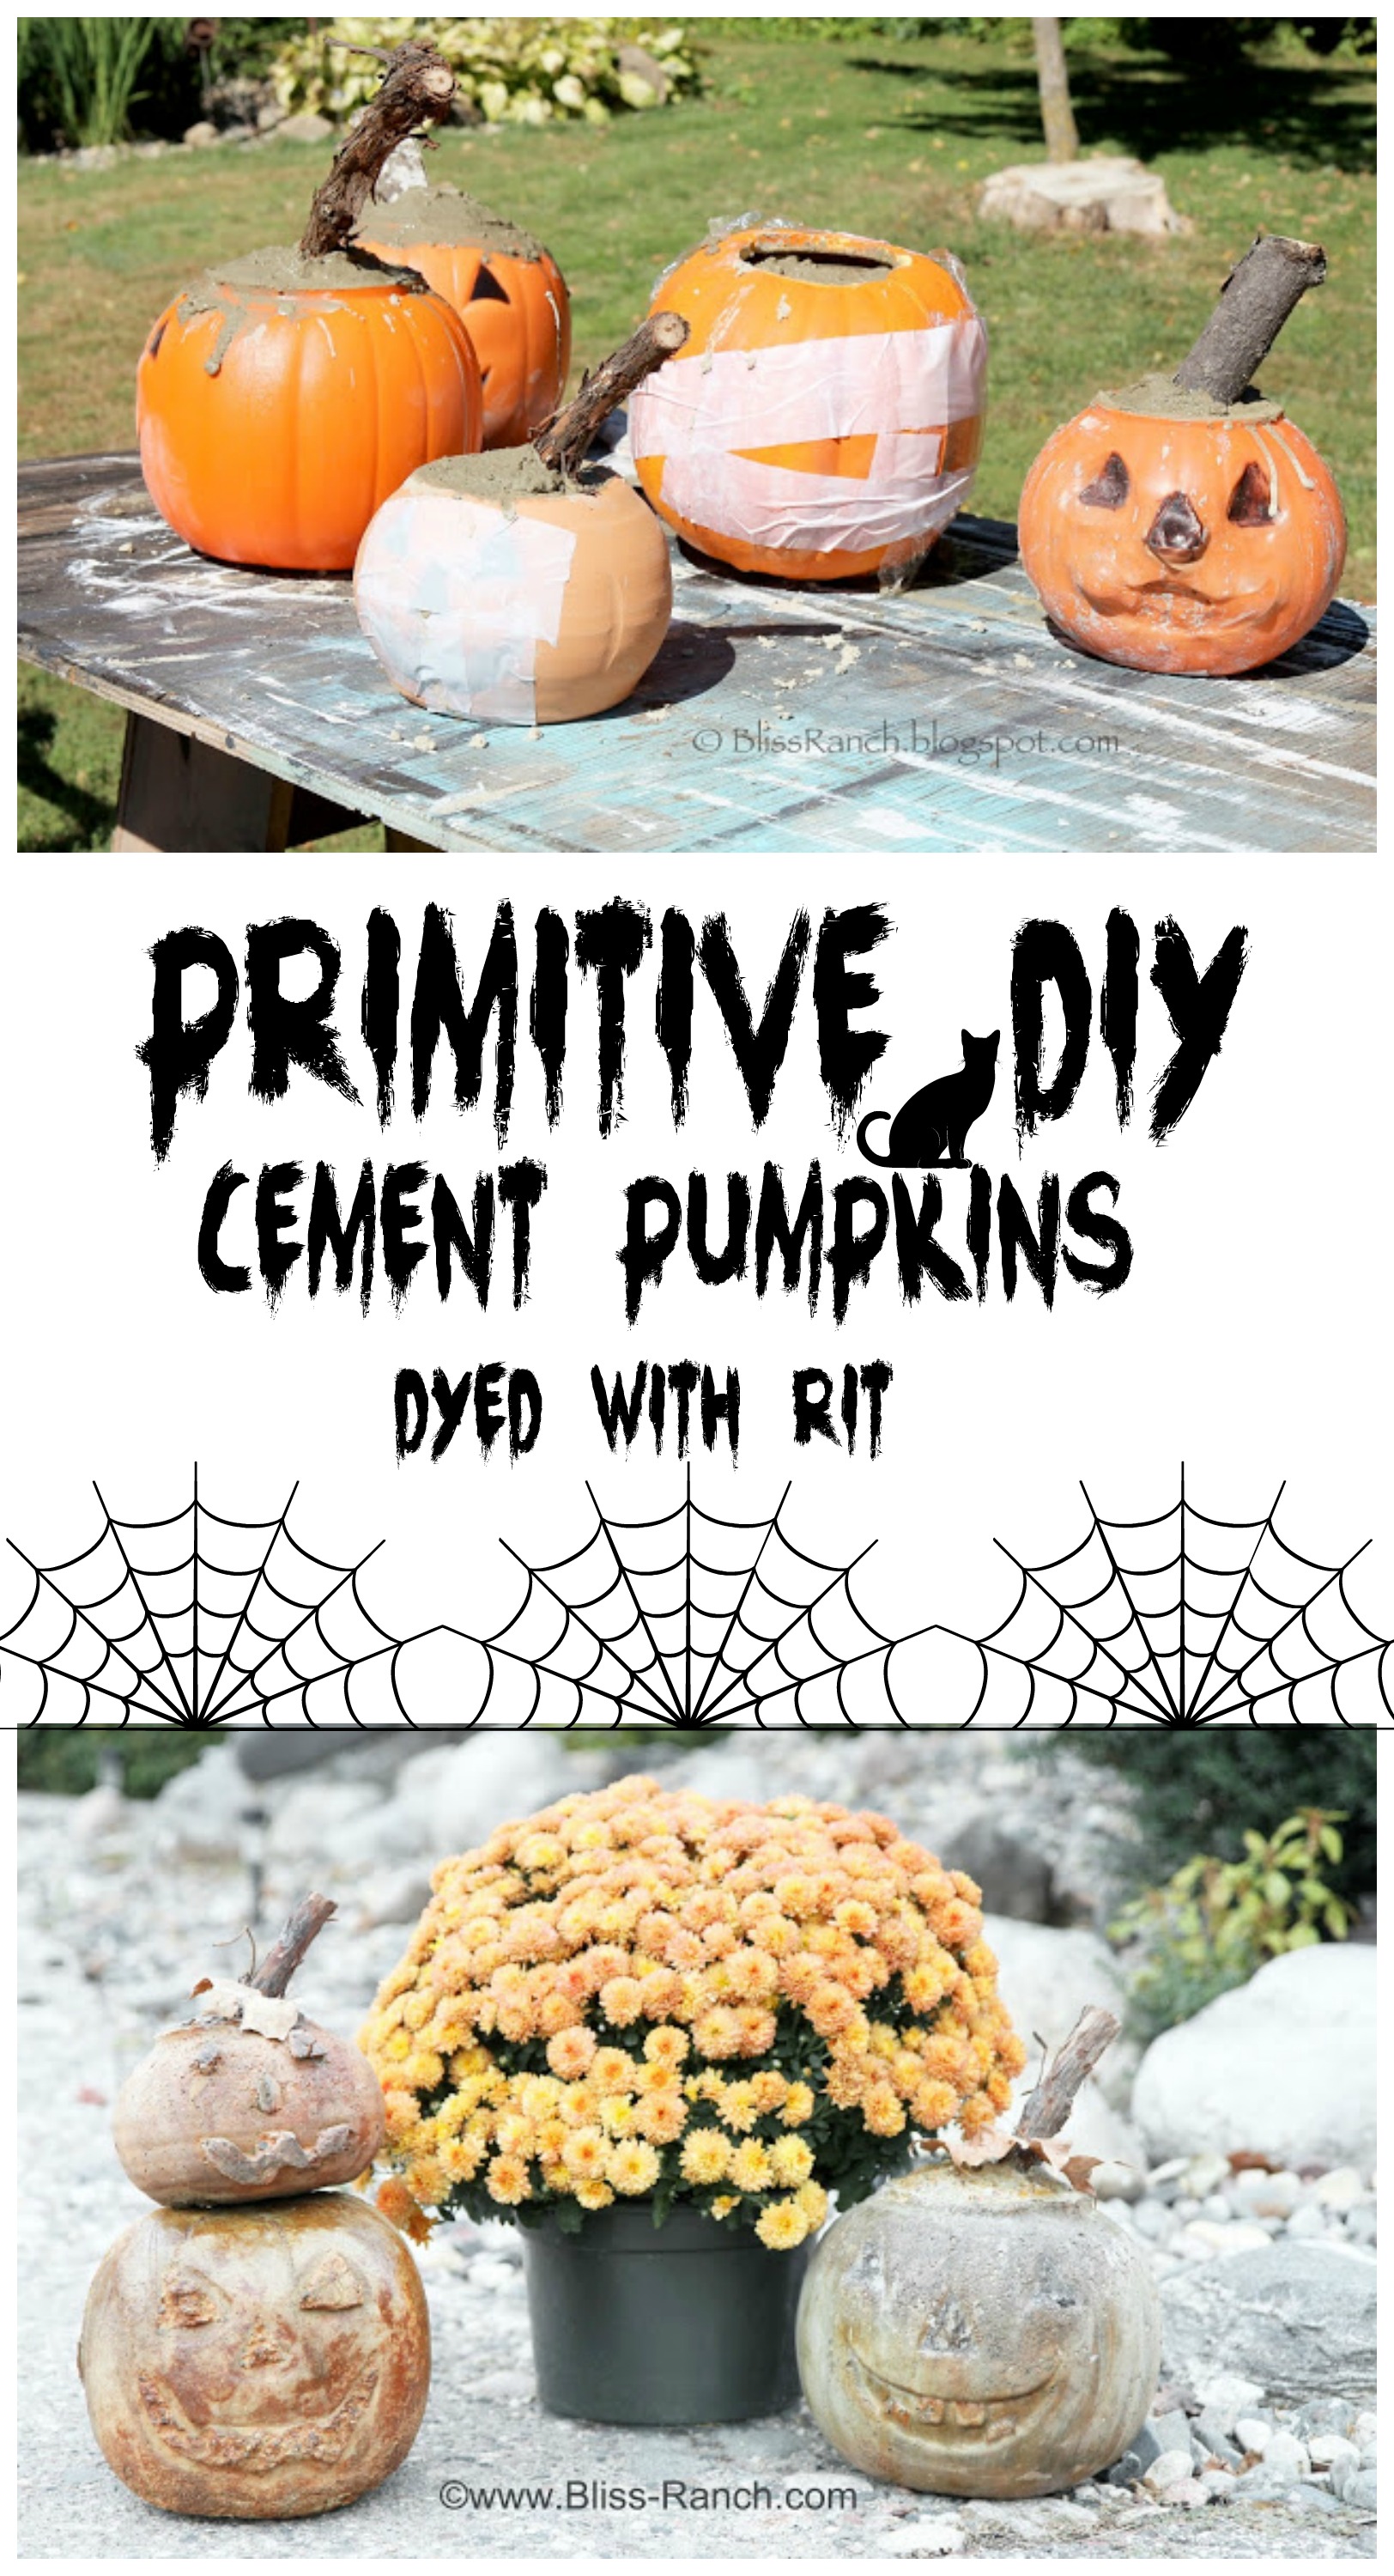 Primitive diy cement pumpkins dyed with rit dye